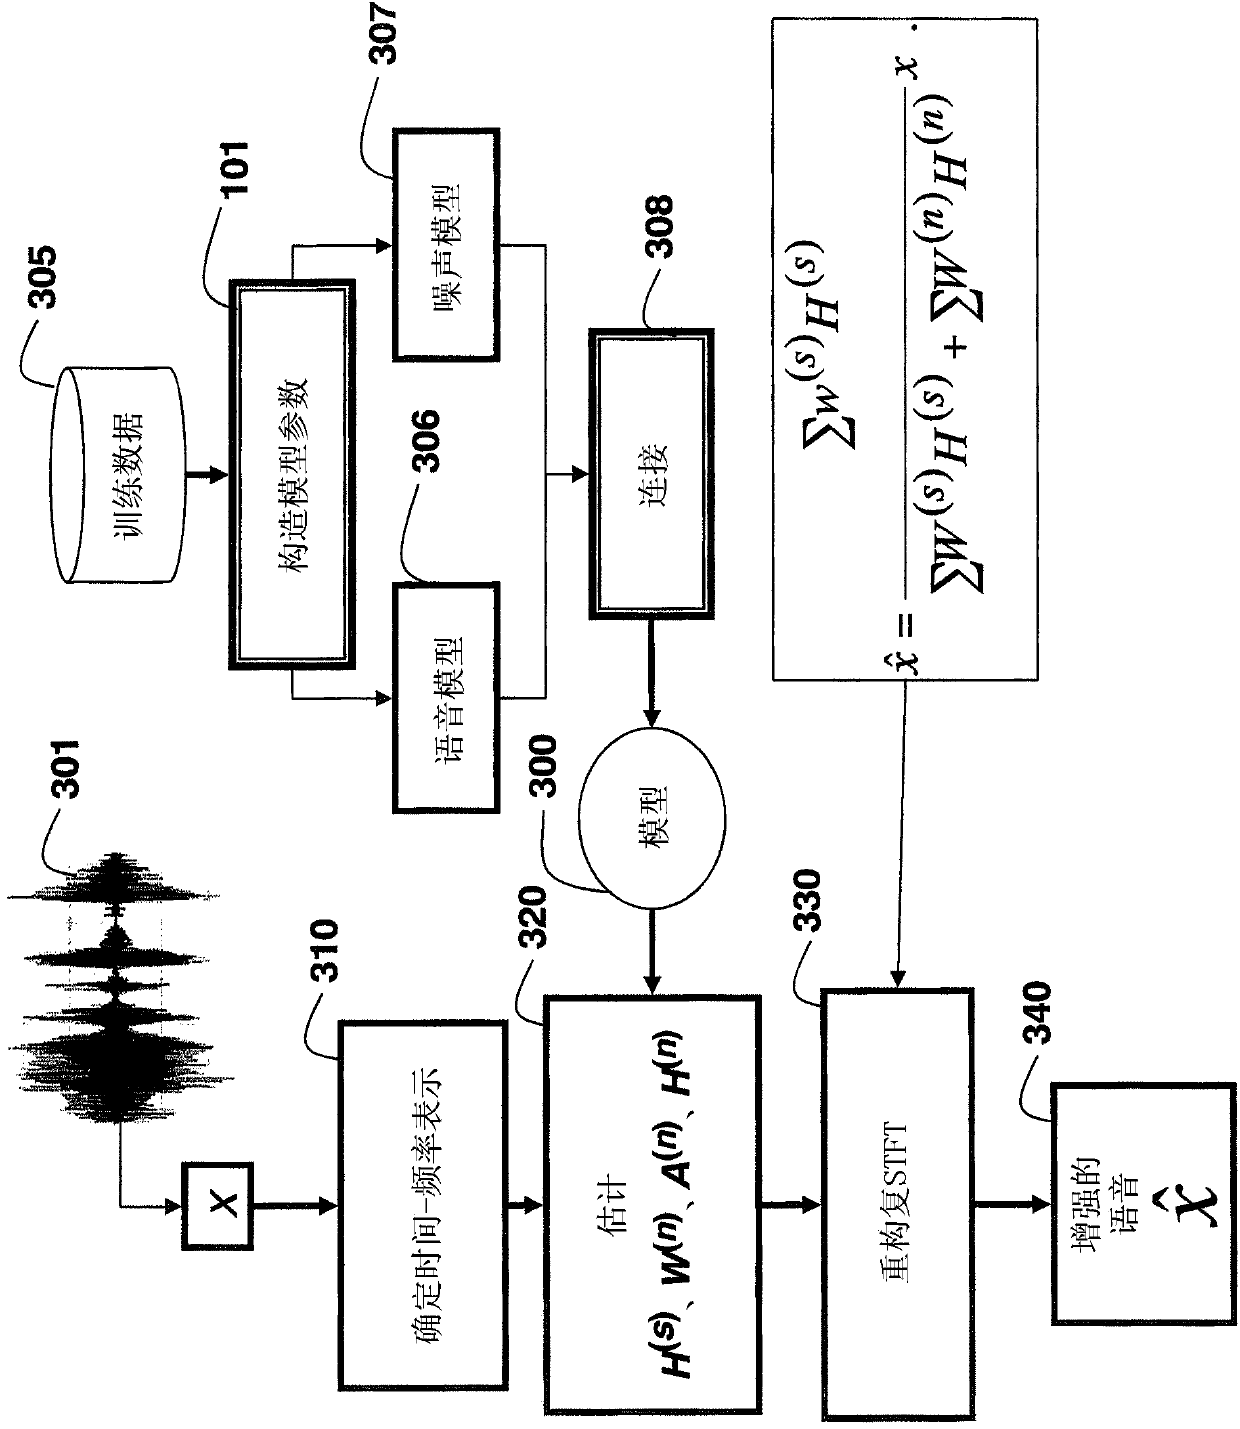 Method for transforming input signal